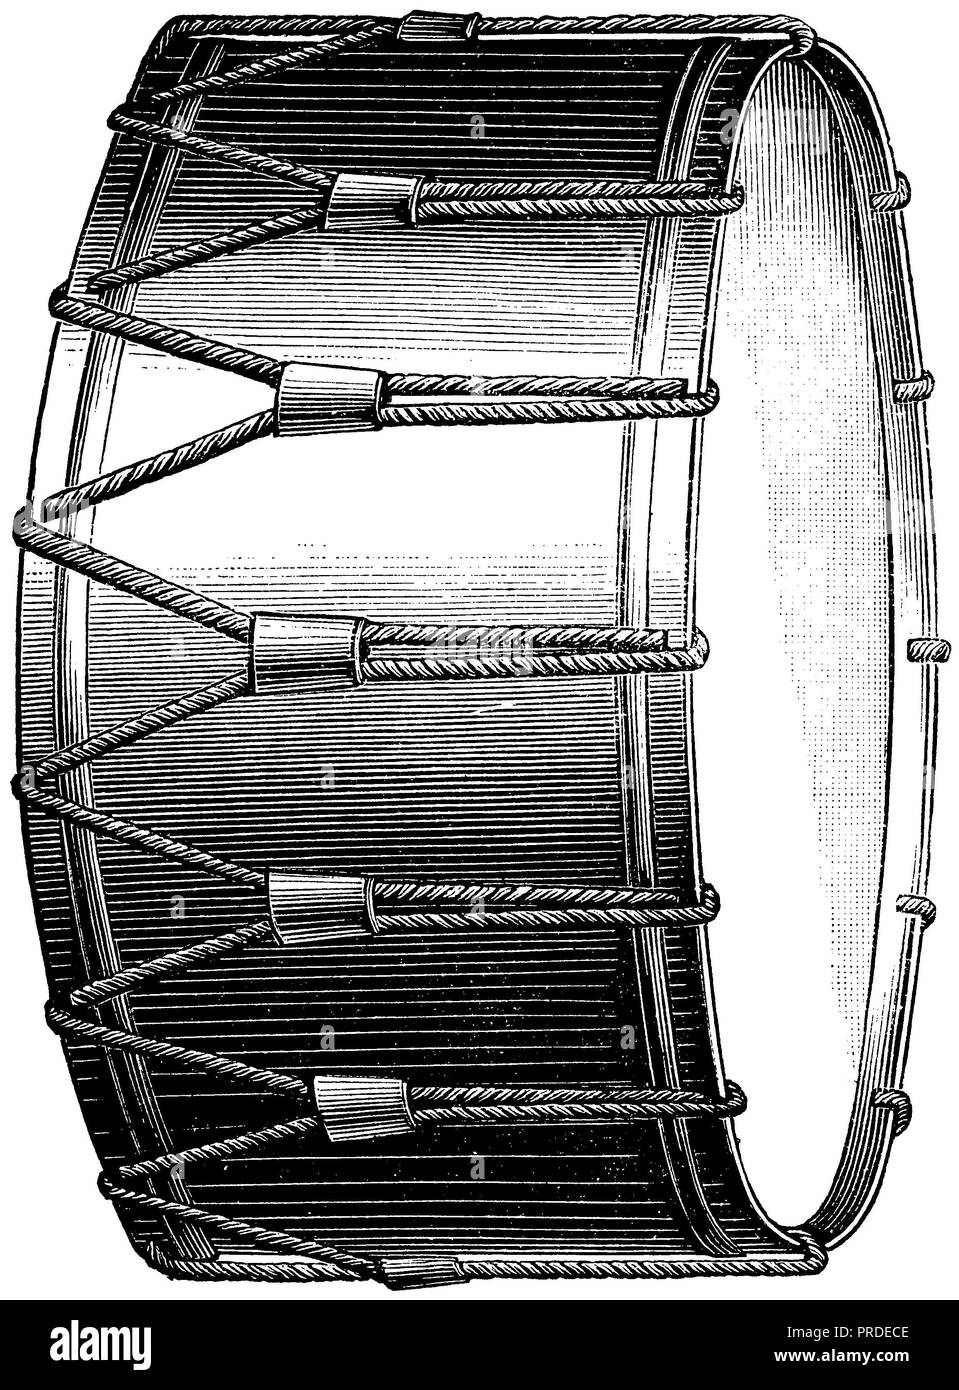 https://c8.alamy.com/comp/PRDECE/big-drum-with-knitting-anonym-1890-PRDECE.jpg